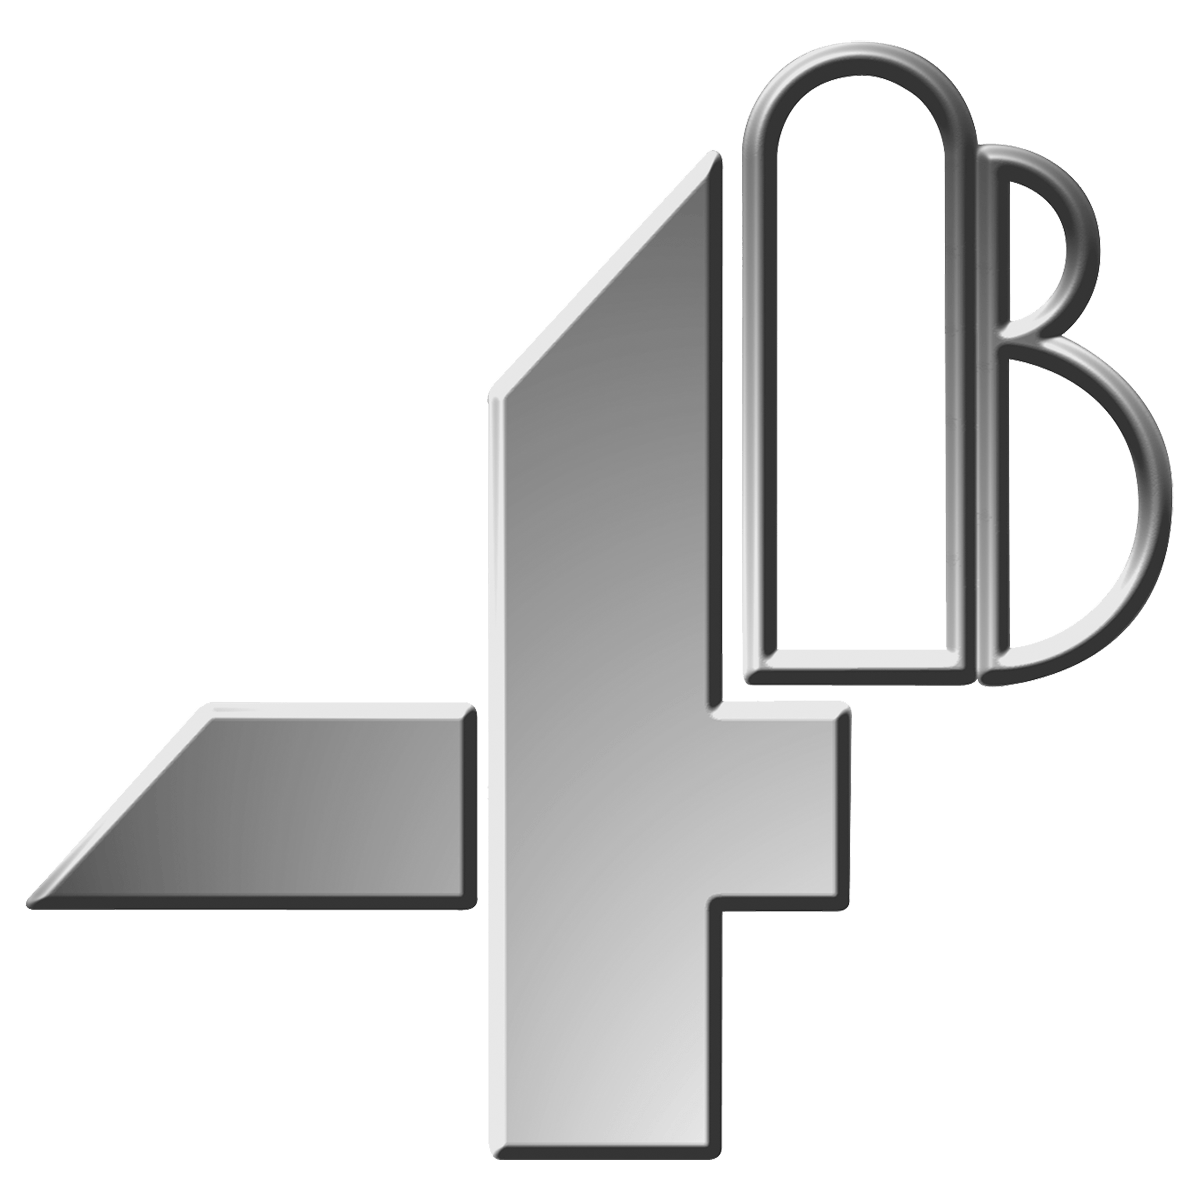 4B Logo - Website Linking & Logo Use | Go4B